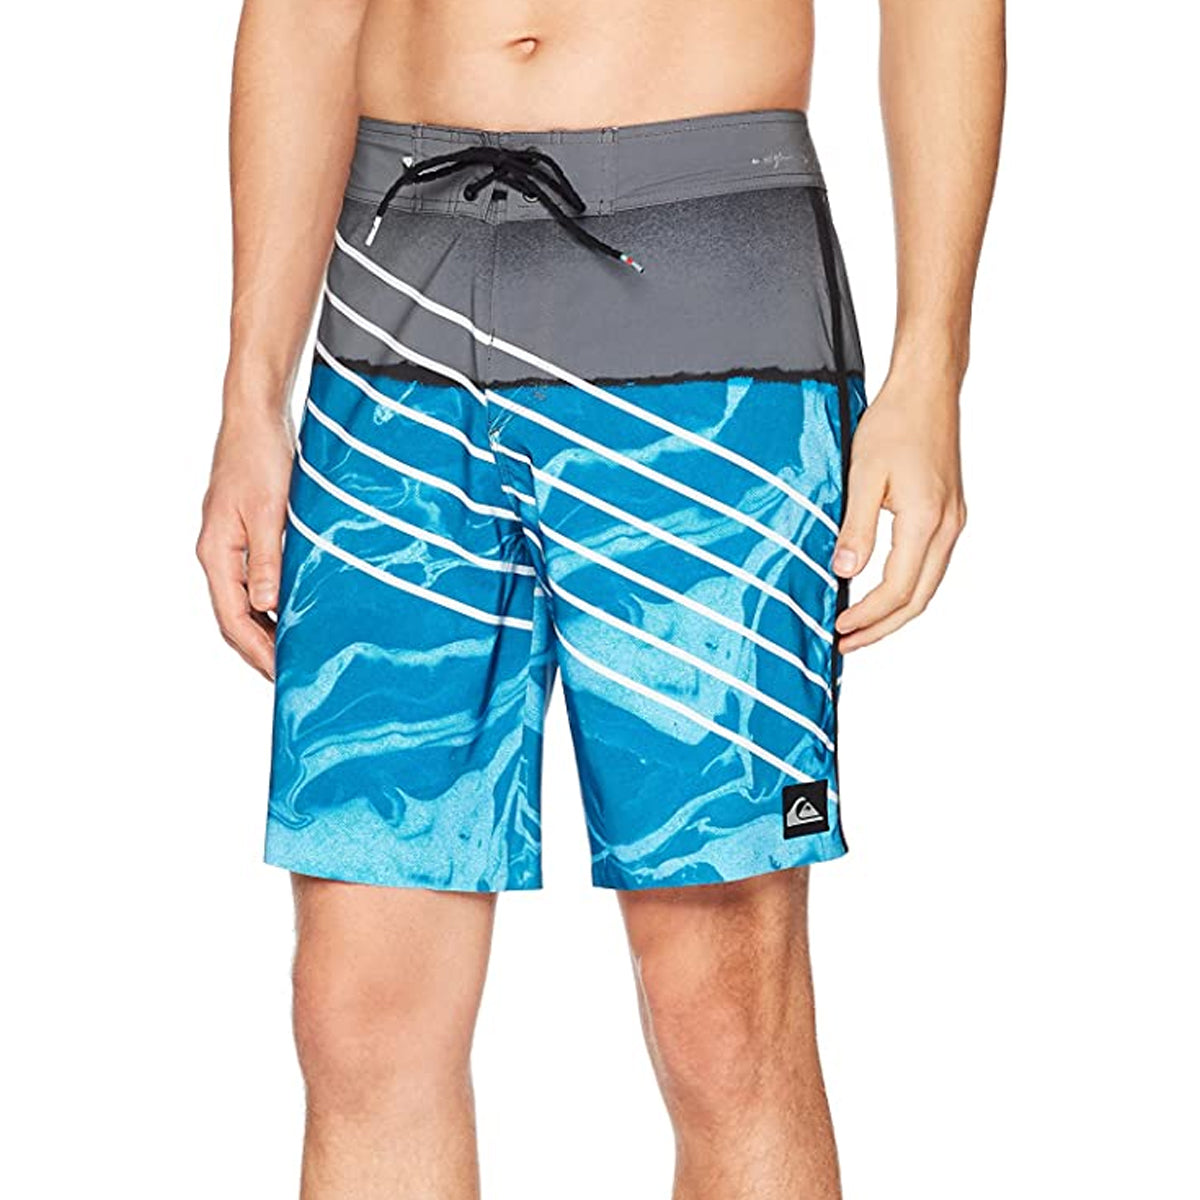 Quiksilver Highline Lava Slash Men's Boardshort Shorts - Real Teal